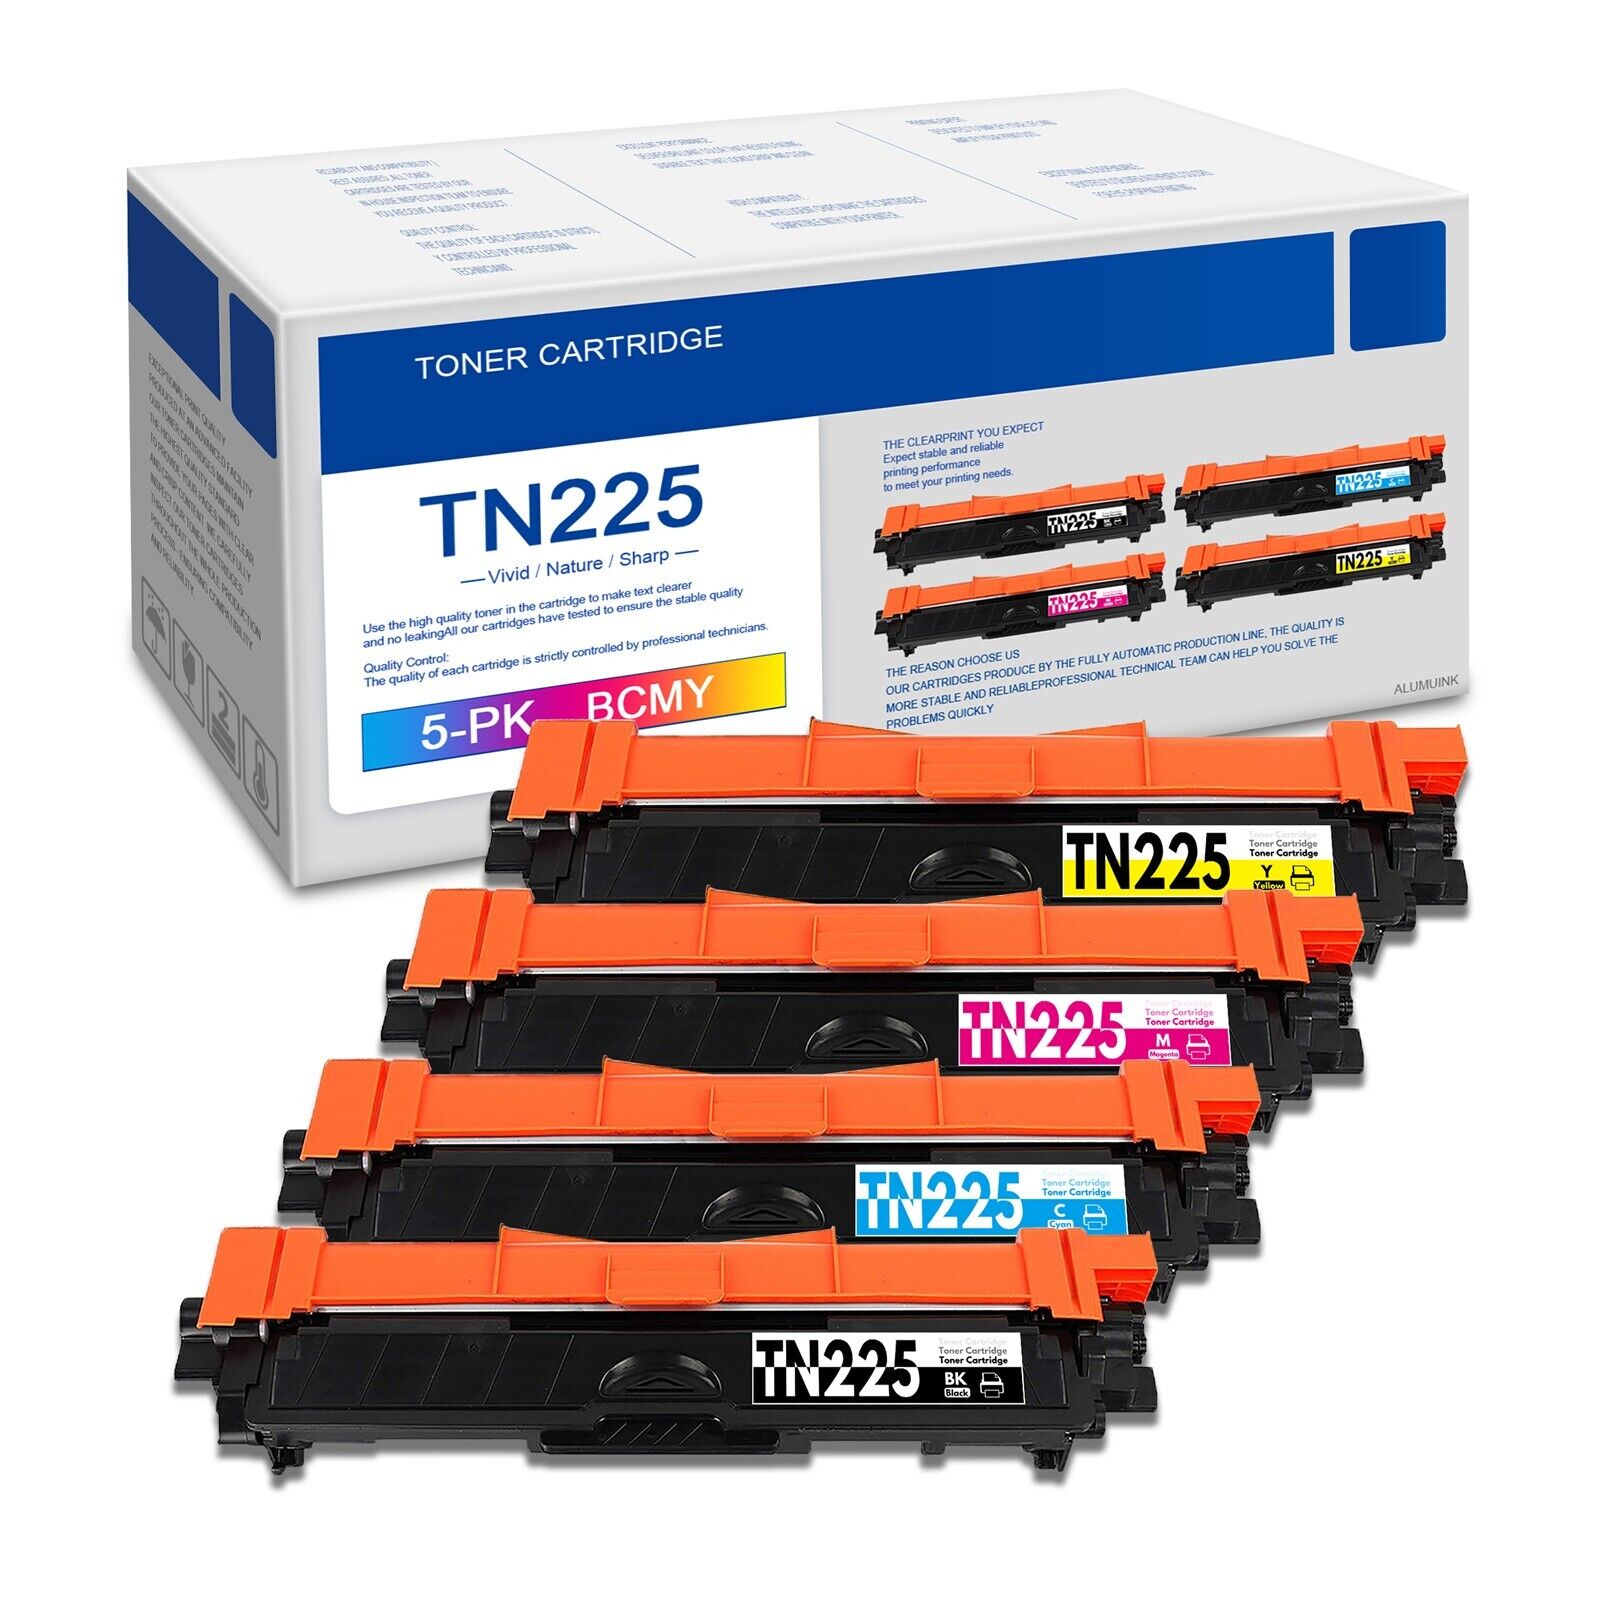 4PK TN225 (BK/C/M/Y) Toner Cartridge Replacement for Brother HL-3150CW Printer